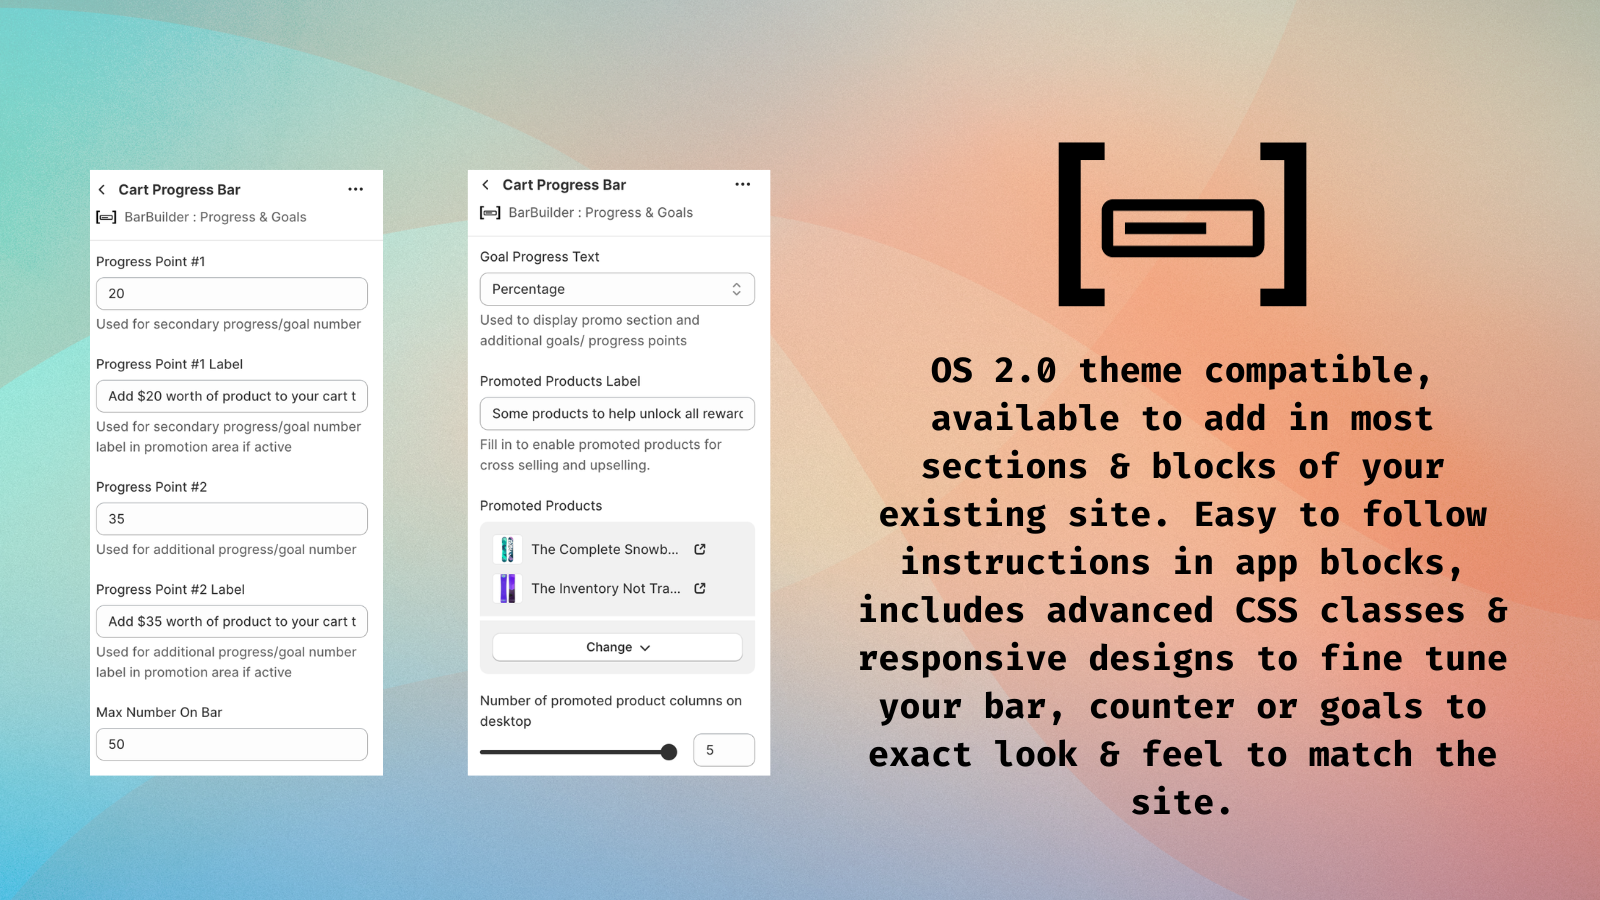 OS 2.0 theme compatible